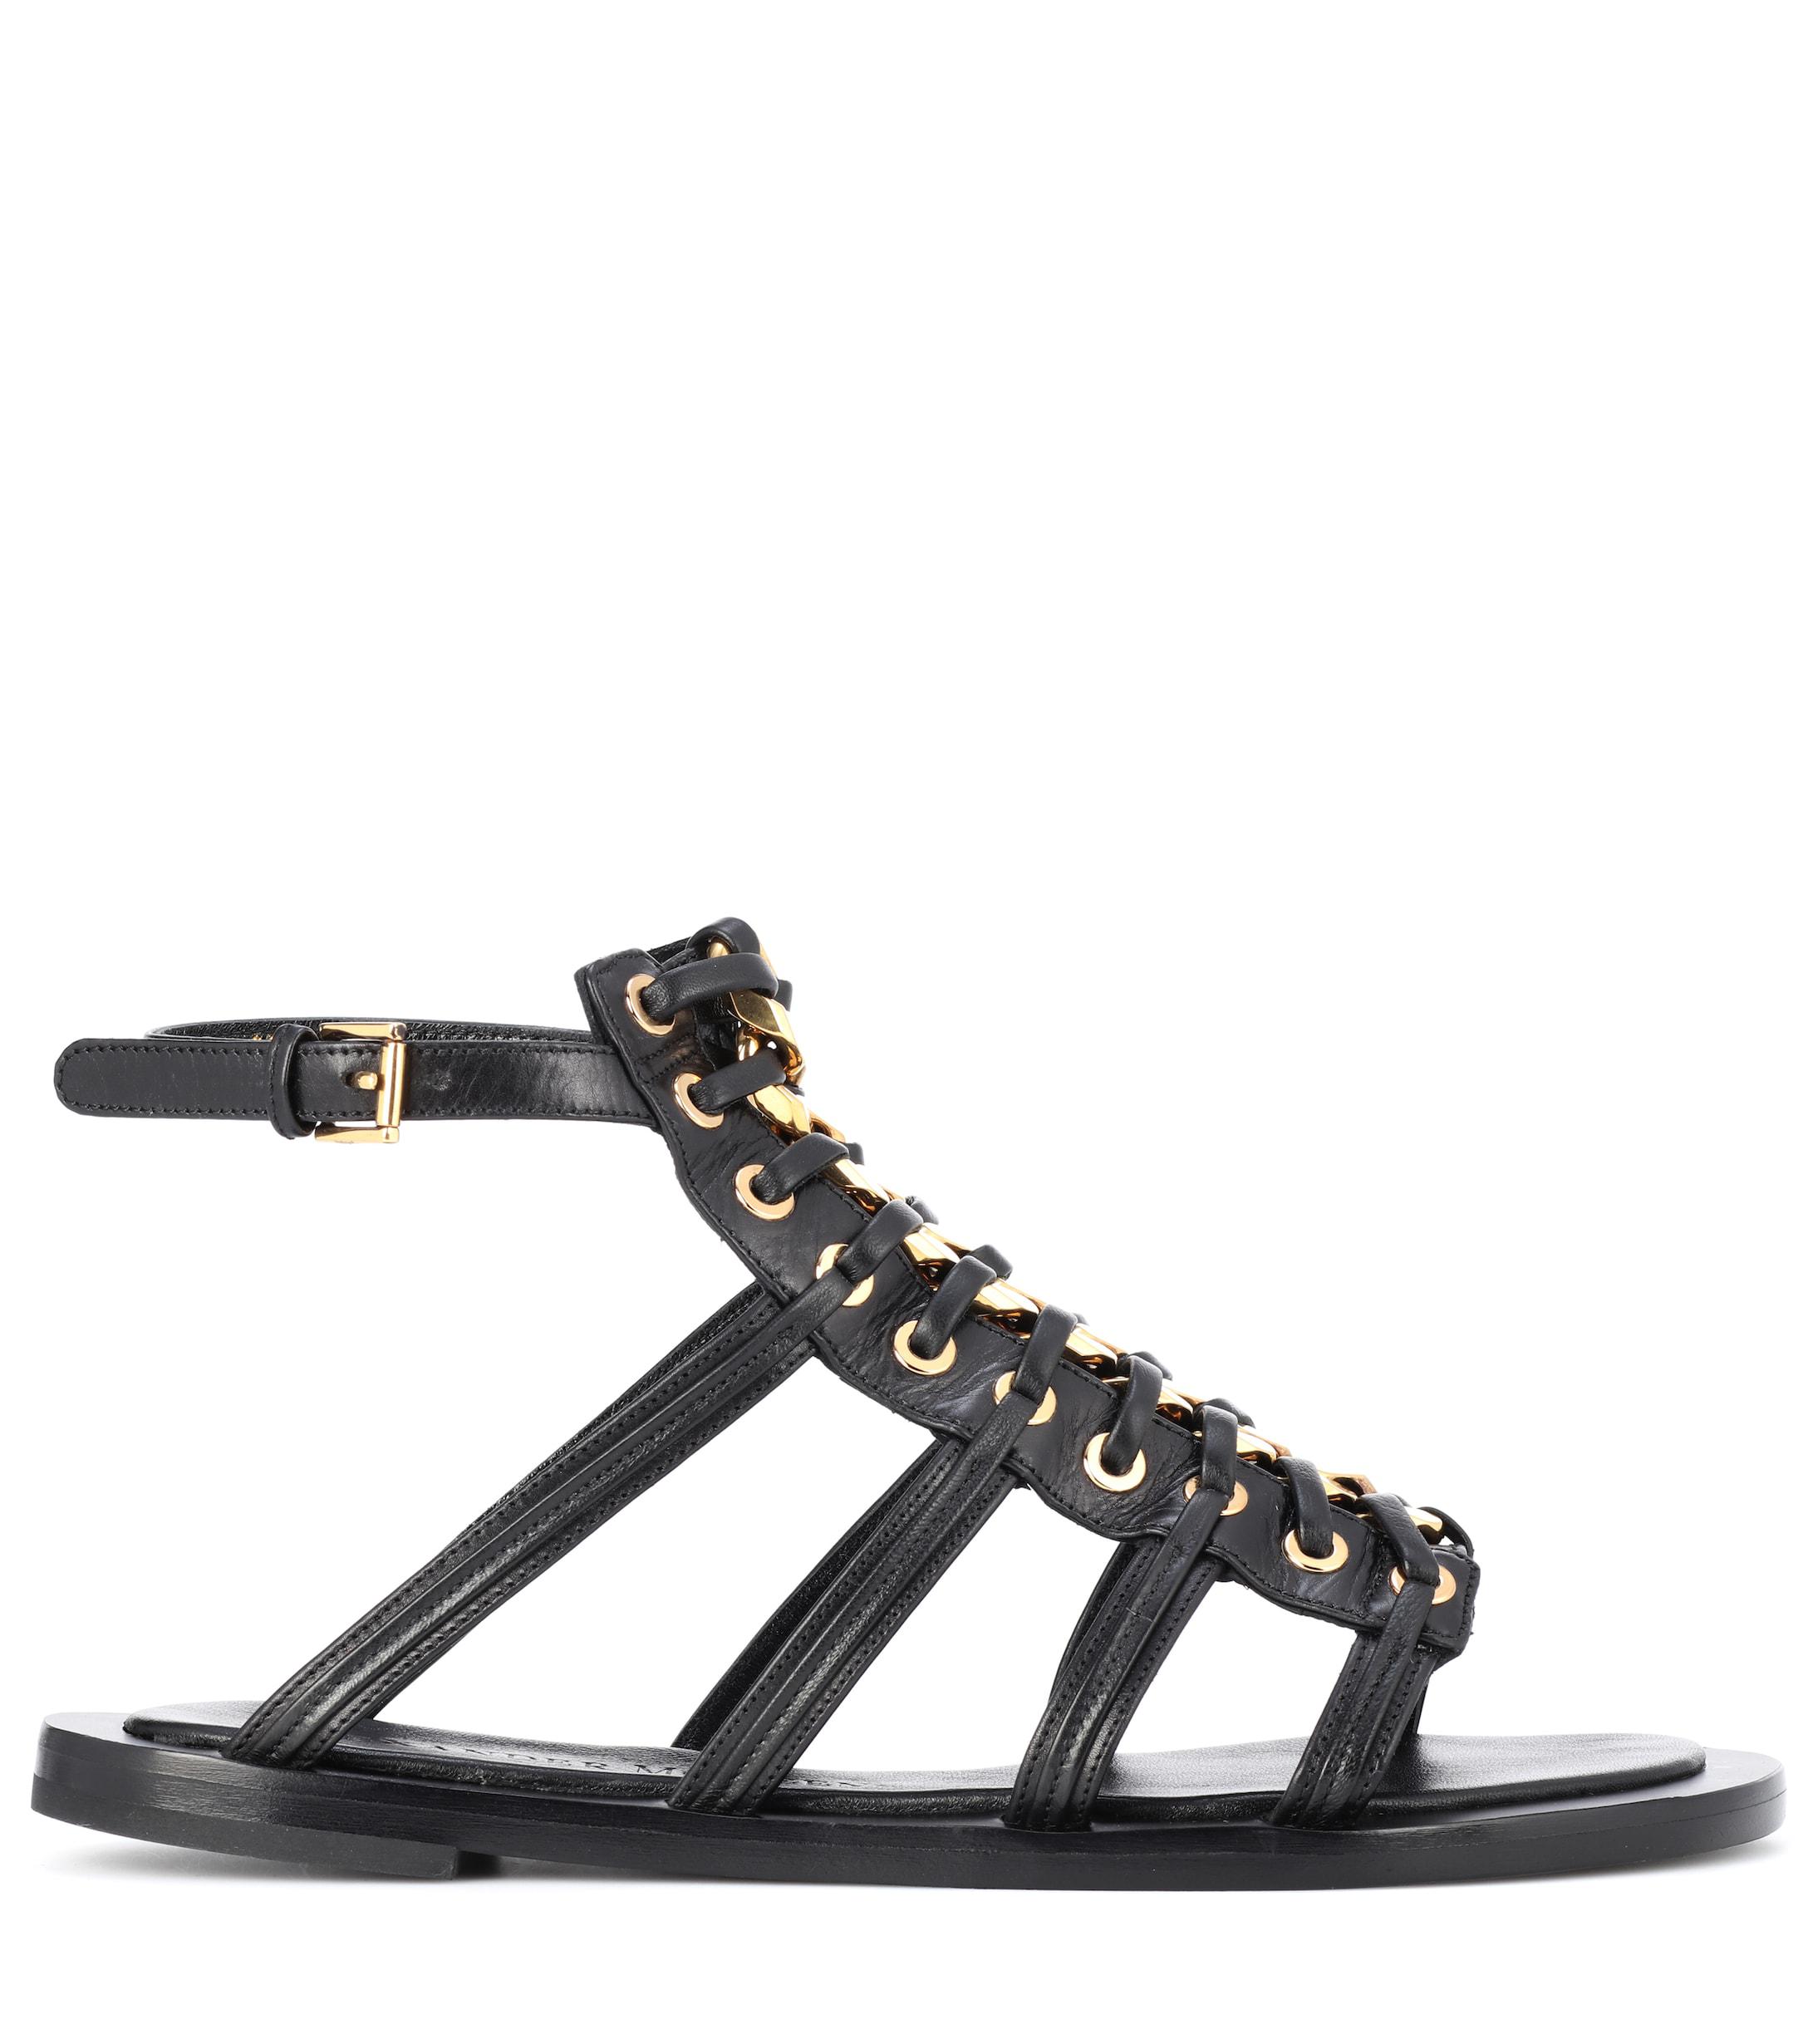 Alexander McQueen Leather Gladiator Sandals in Black - Lyst